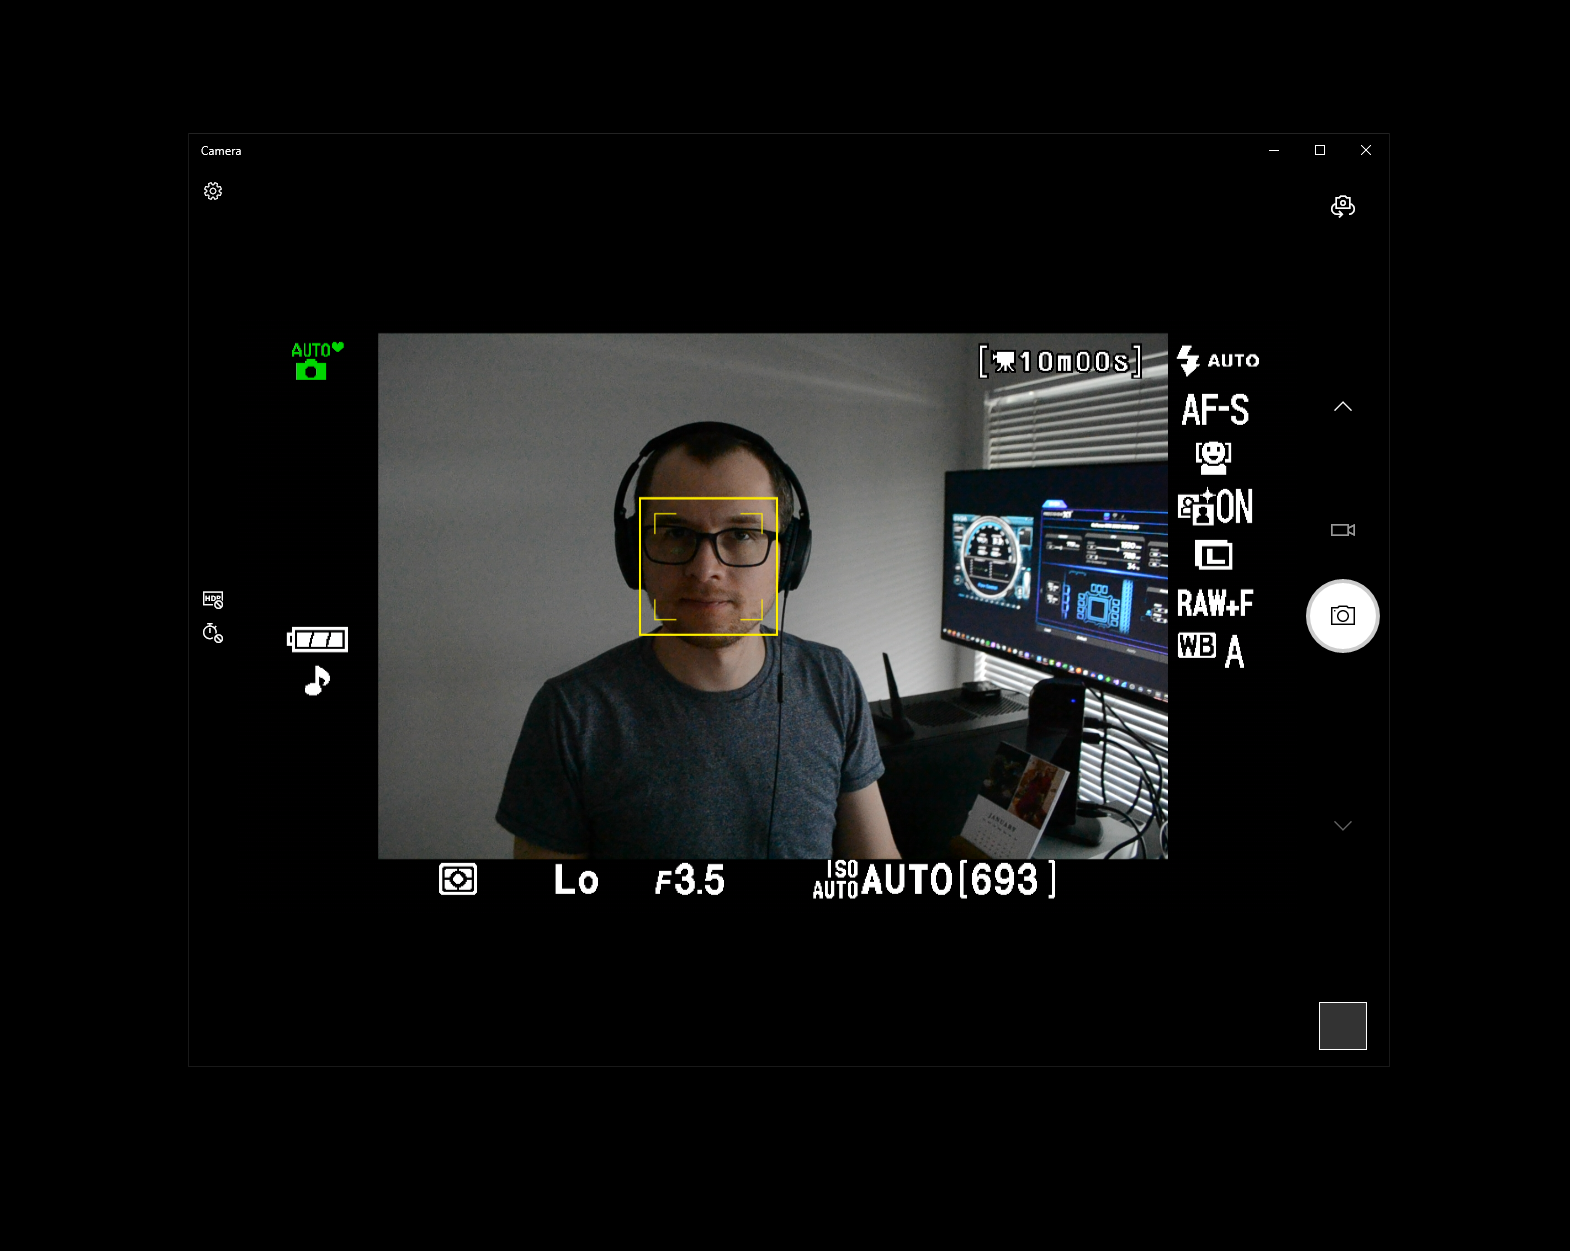 Nikon D3100 live view, seen in the Windows camera app